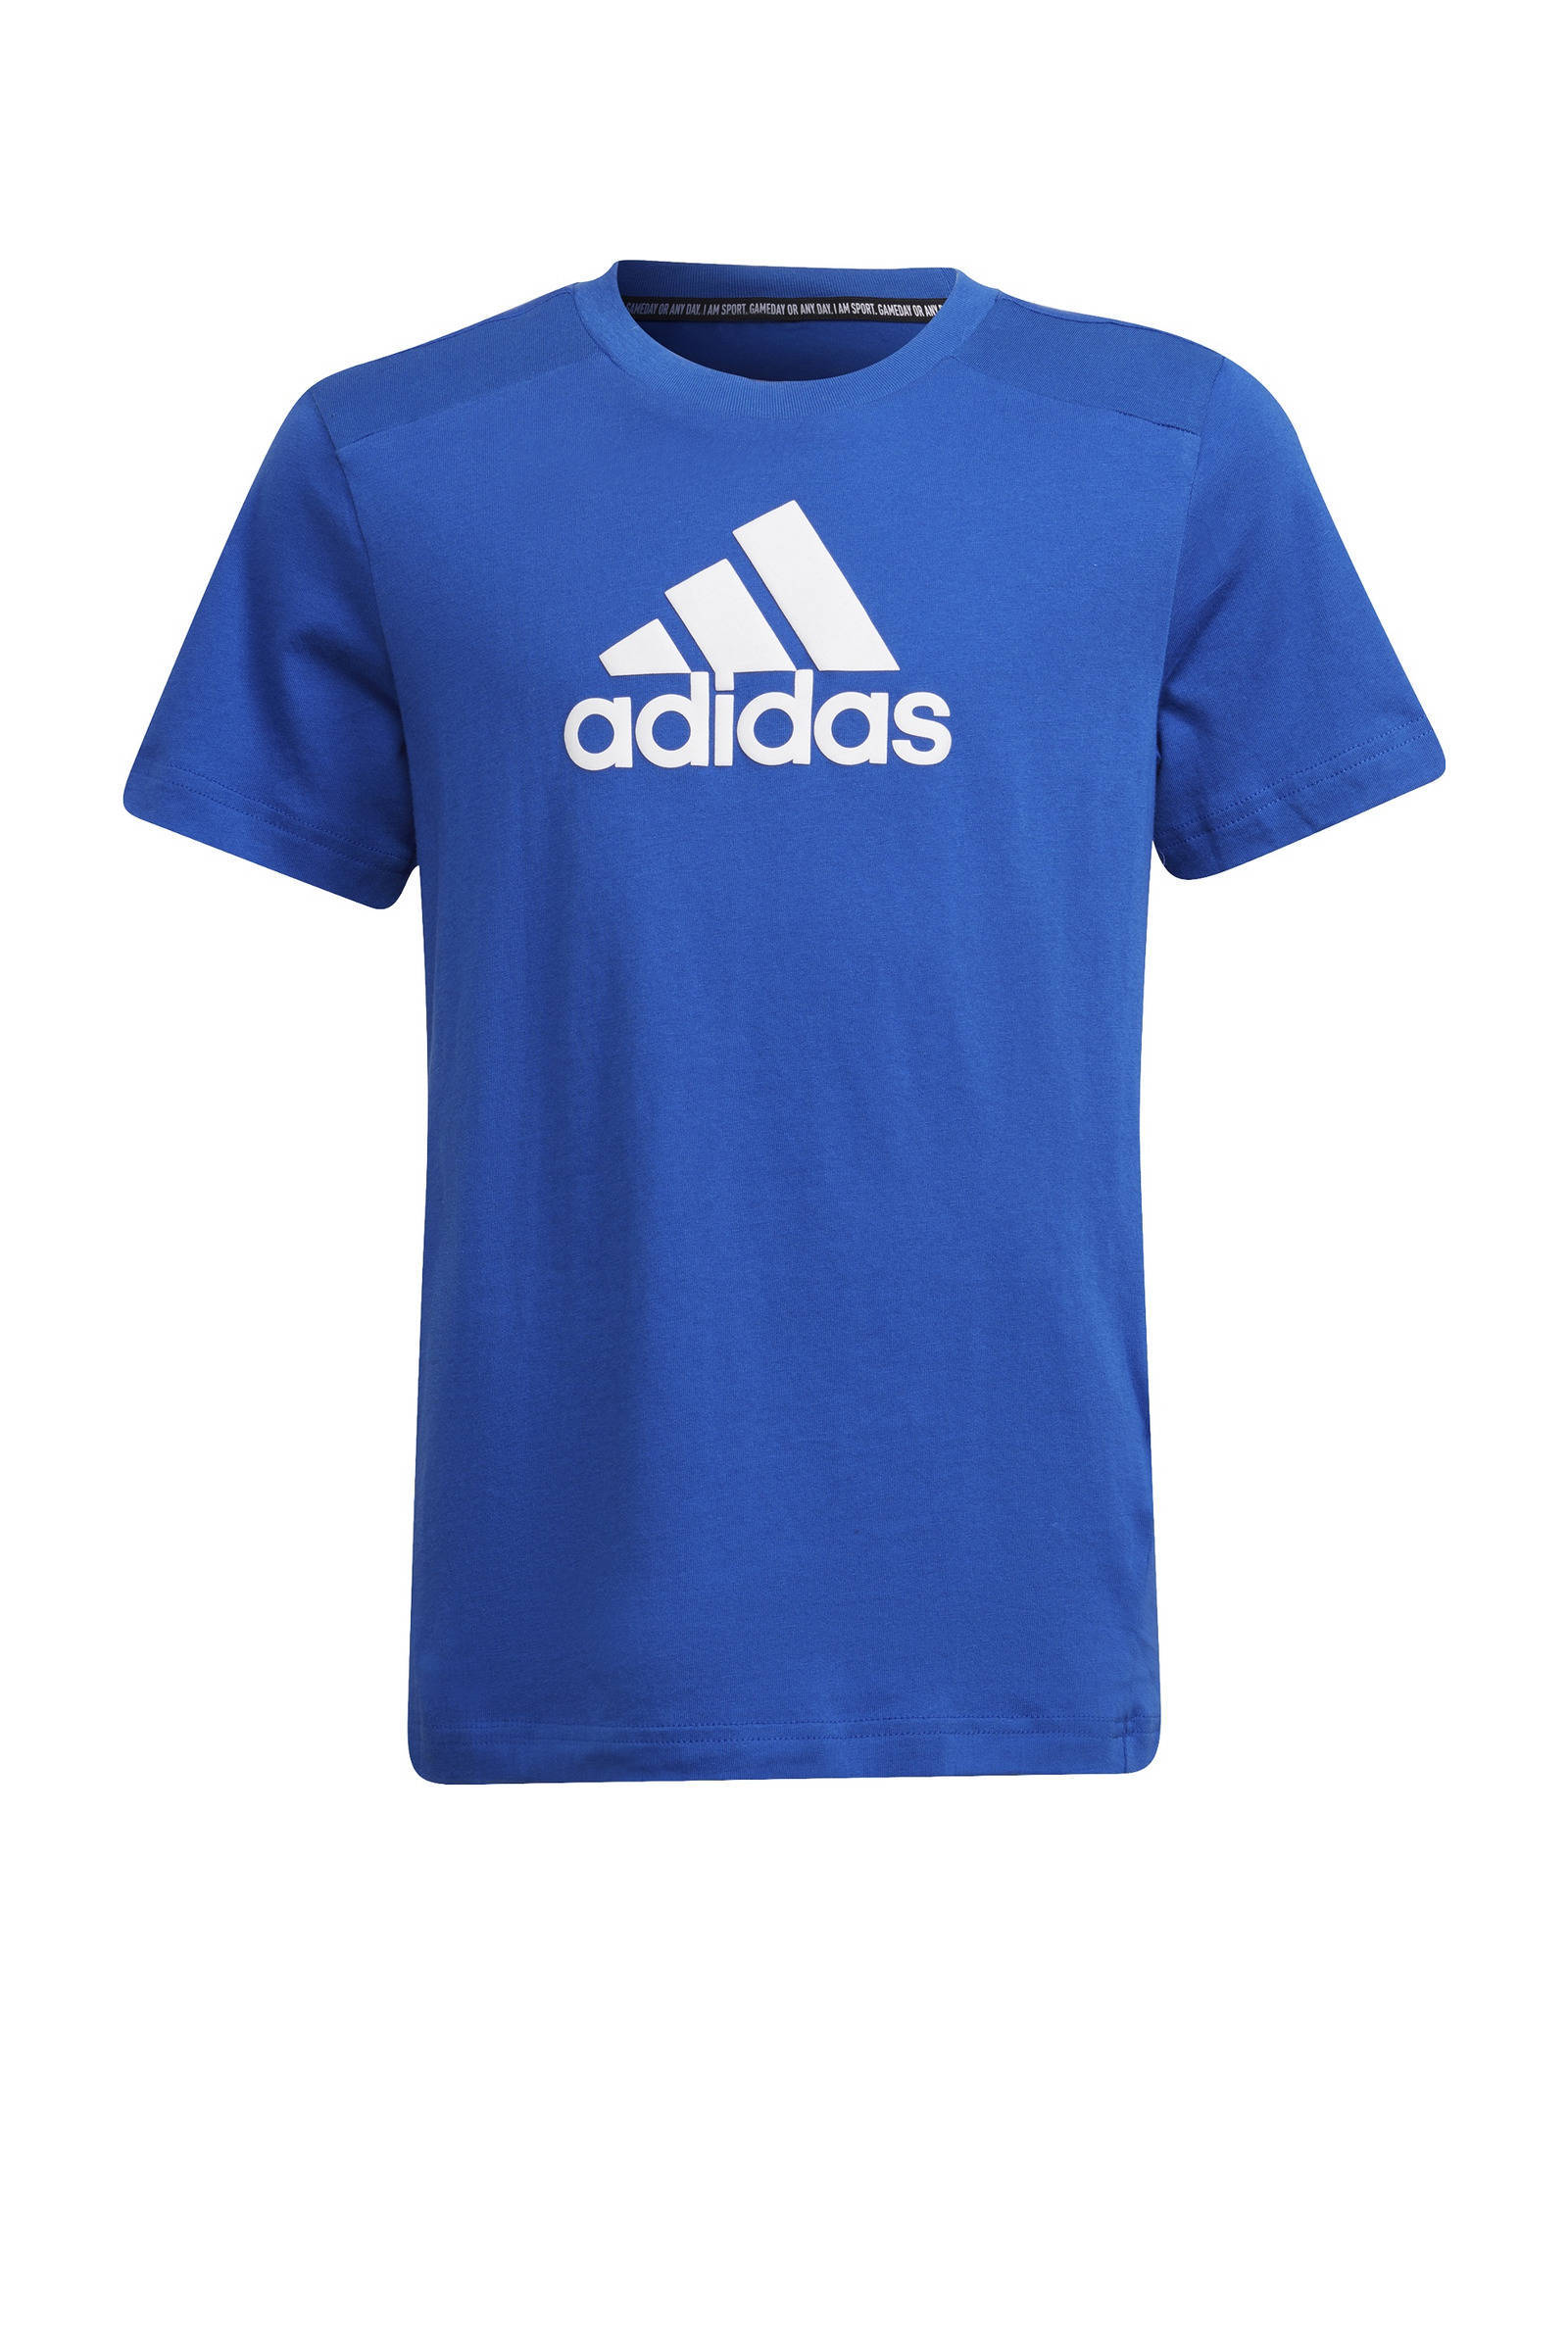 Adidas Performance sport T shirt kobaltblauw/wit online kopen